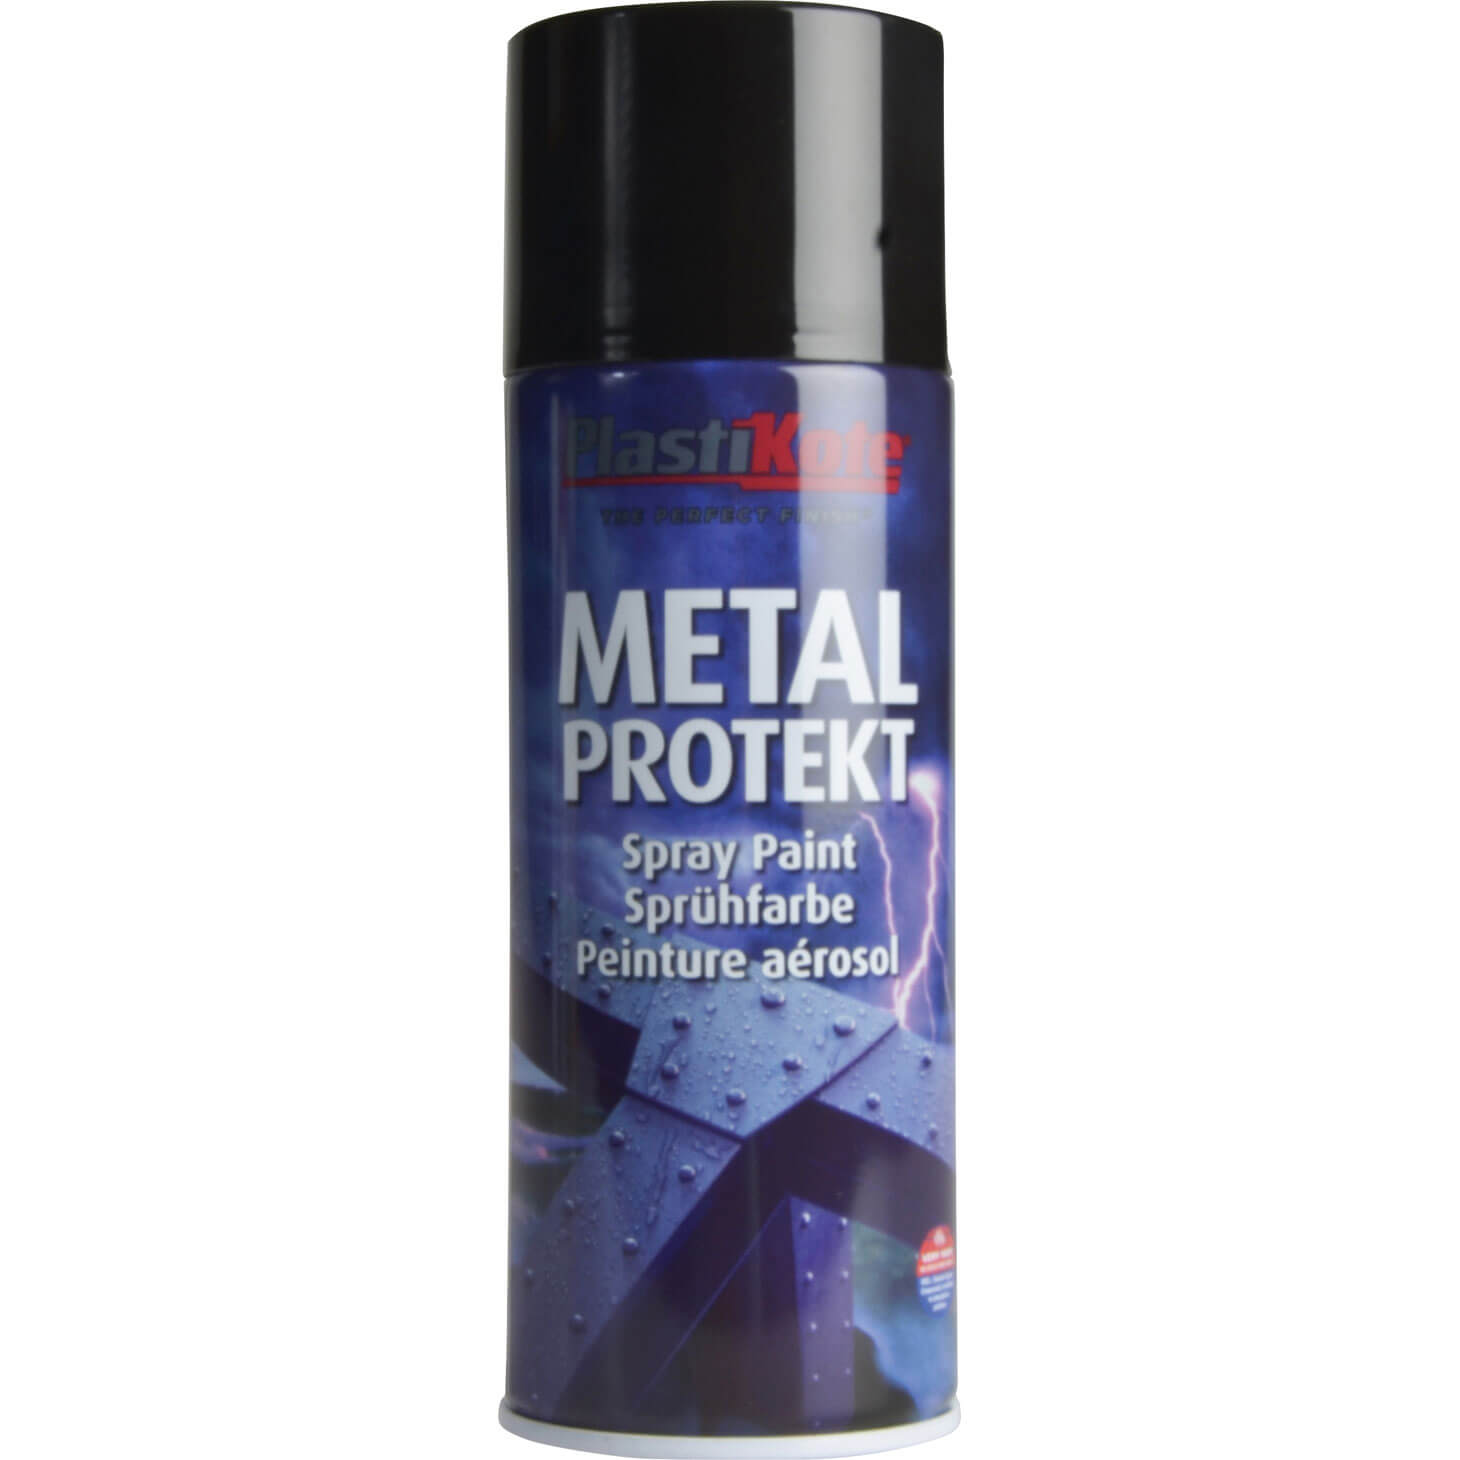 Plastikote Metal Protekt Aerosol Spray Paint Gloss Black 400ml